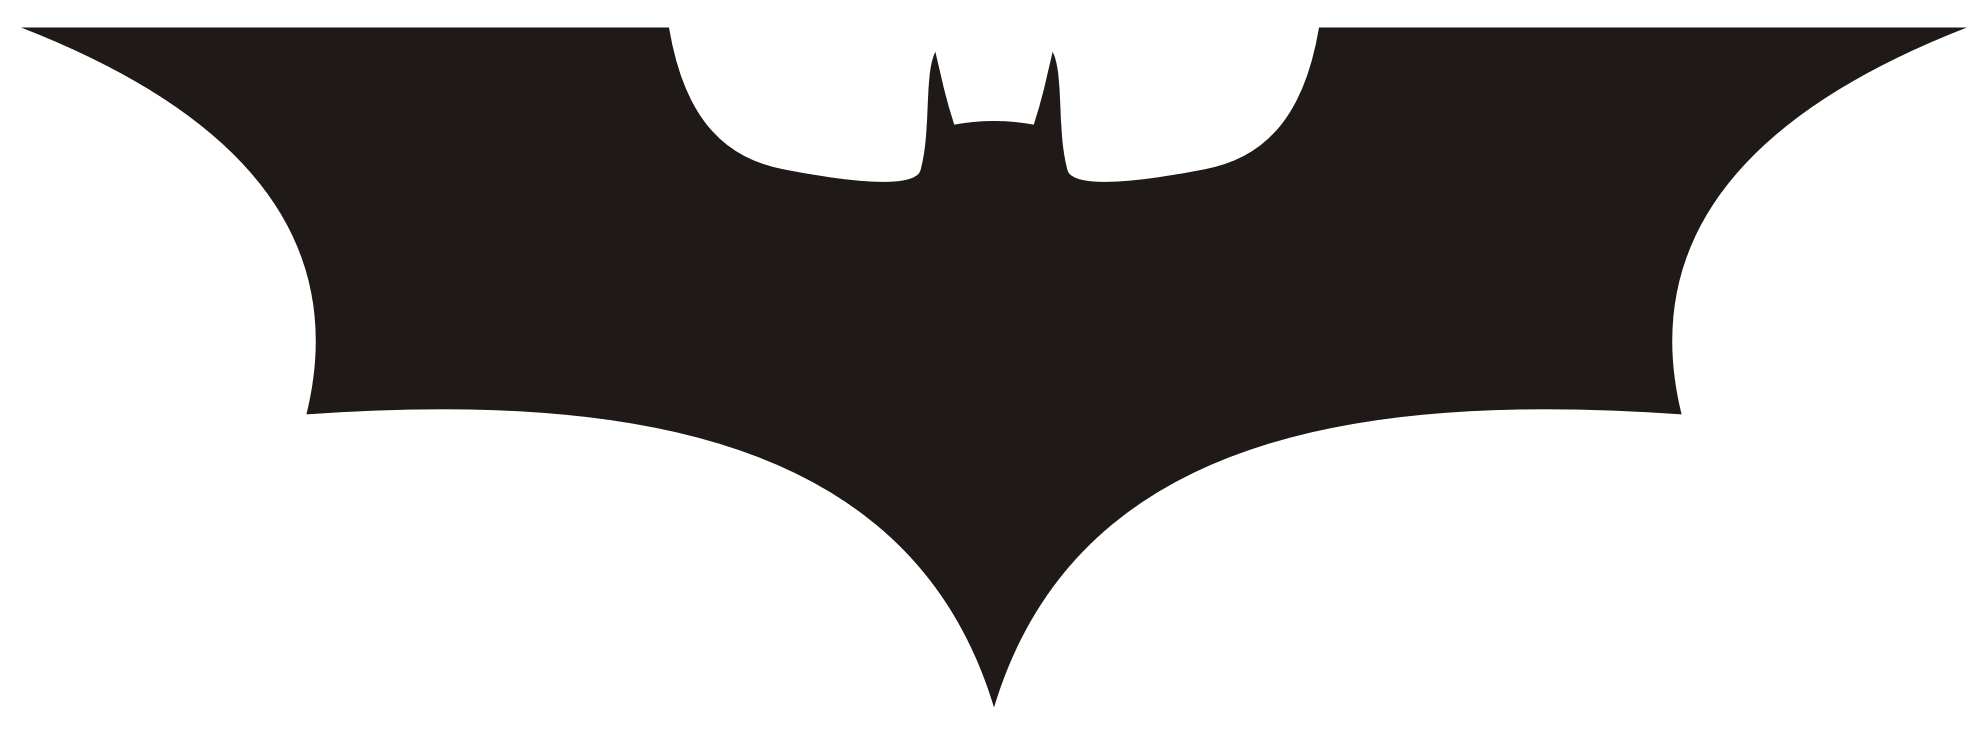 batman logo | Logospike.com: Famous and Free Vector Logos